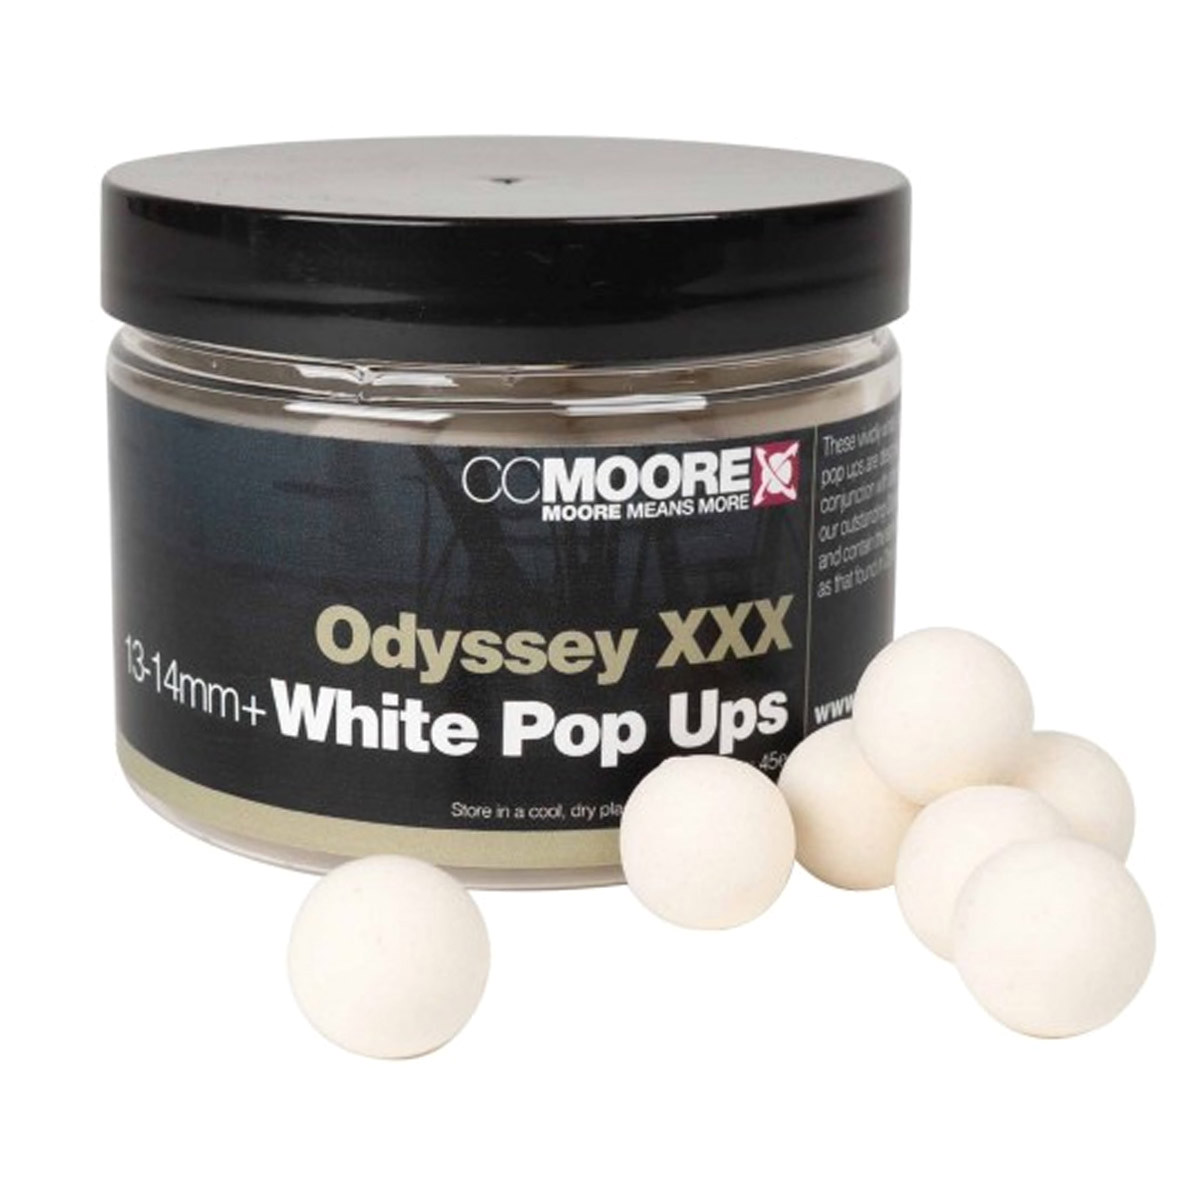 Cc Moore Odyssey XXX White Pop Ups 13-14mm